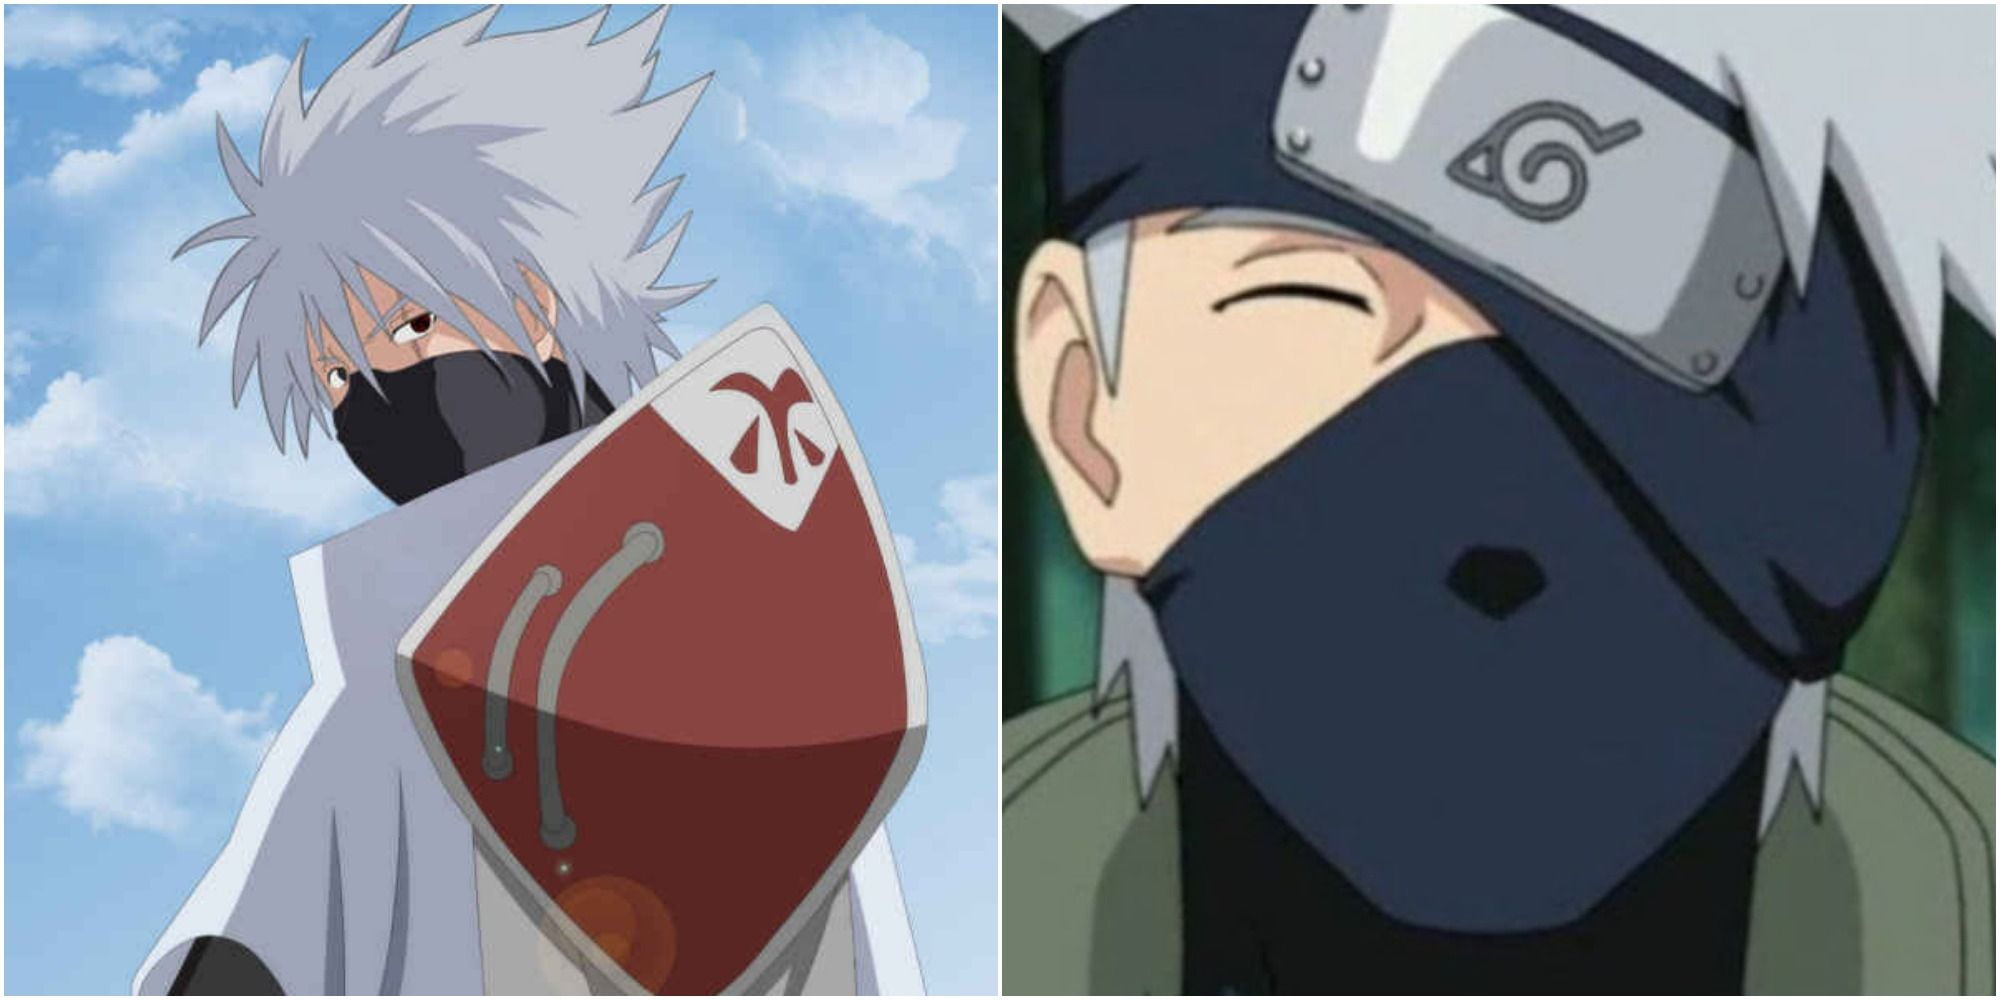 Split image of Kakashi from Naruto as Hokage and smiling beneath his mask.